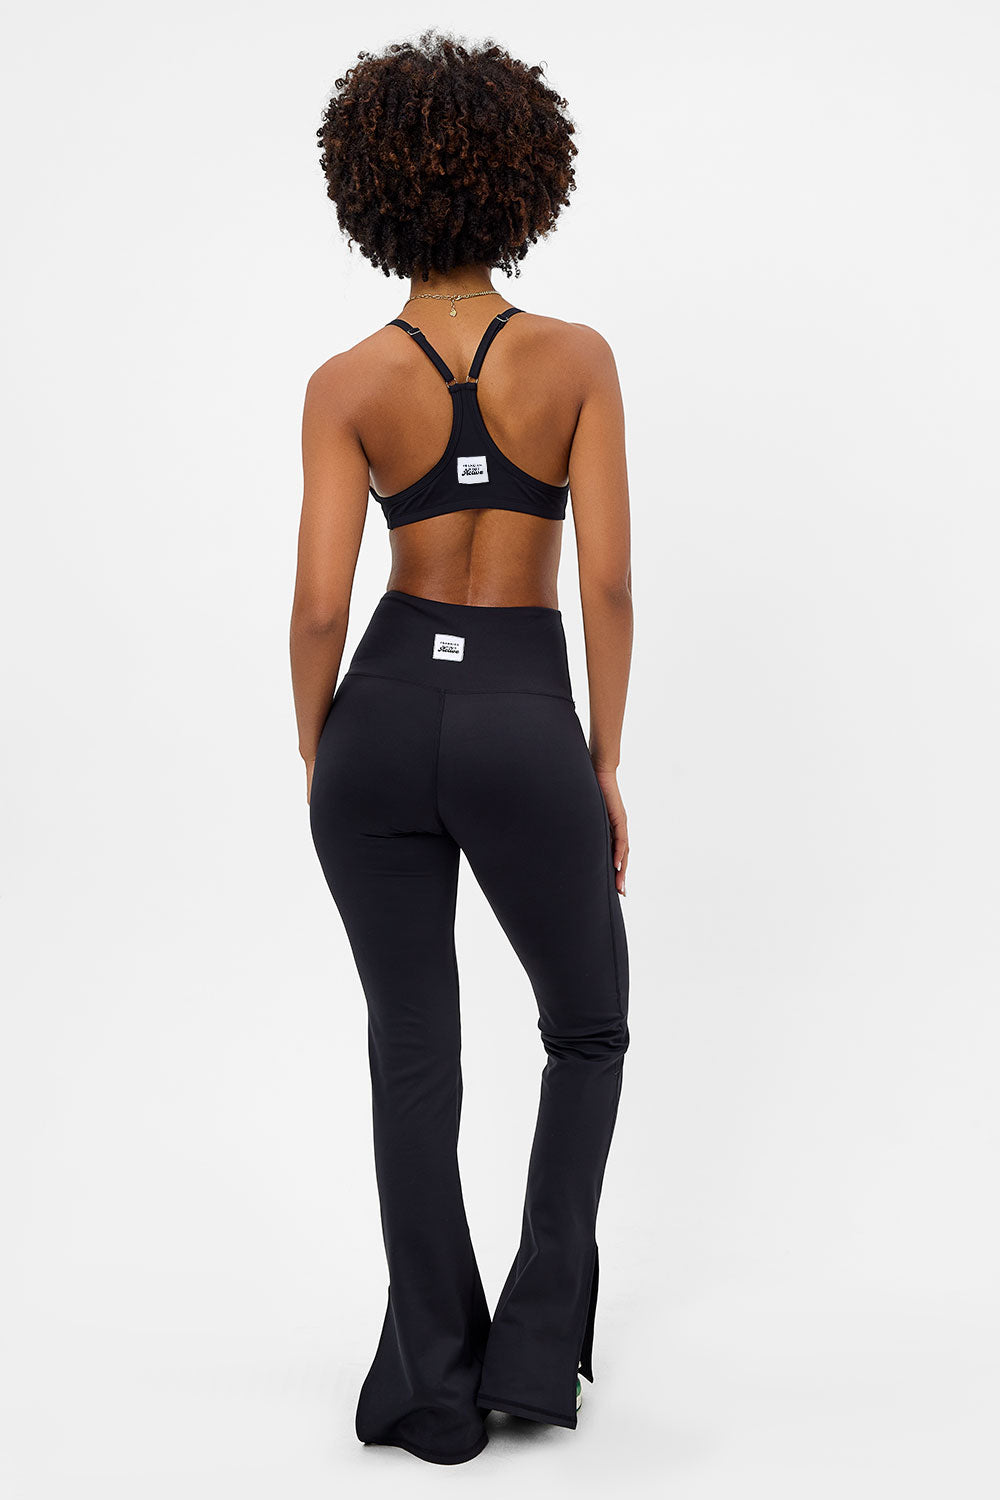 flare legging black women outfit｜TikTok Search